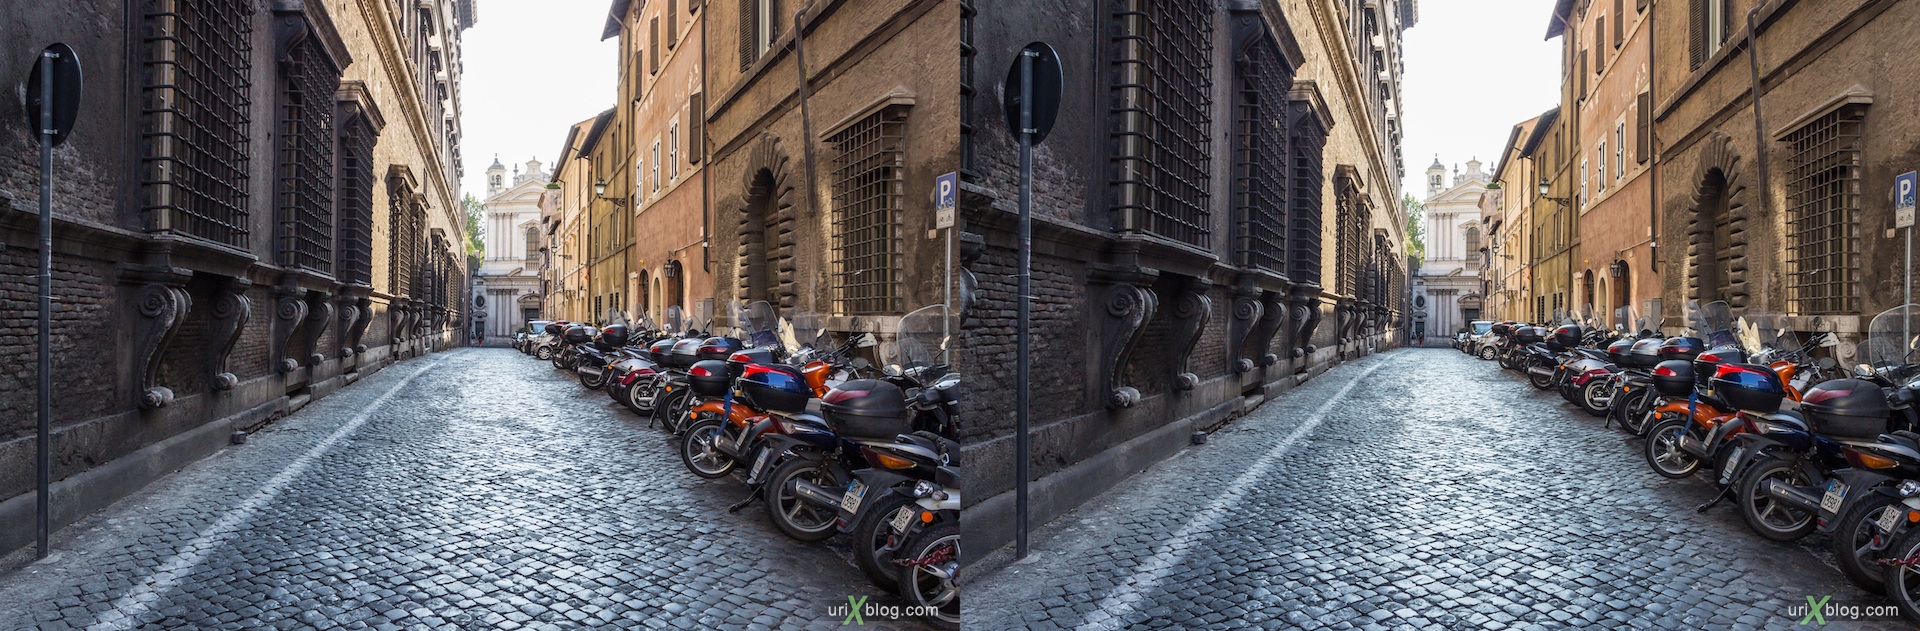 2012, площадь piazza Farnese, улица via dei Farnesi, Рим, Италия, осень, 3D, перекрёстные стереопары, стерео, стереопара, стереопары